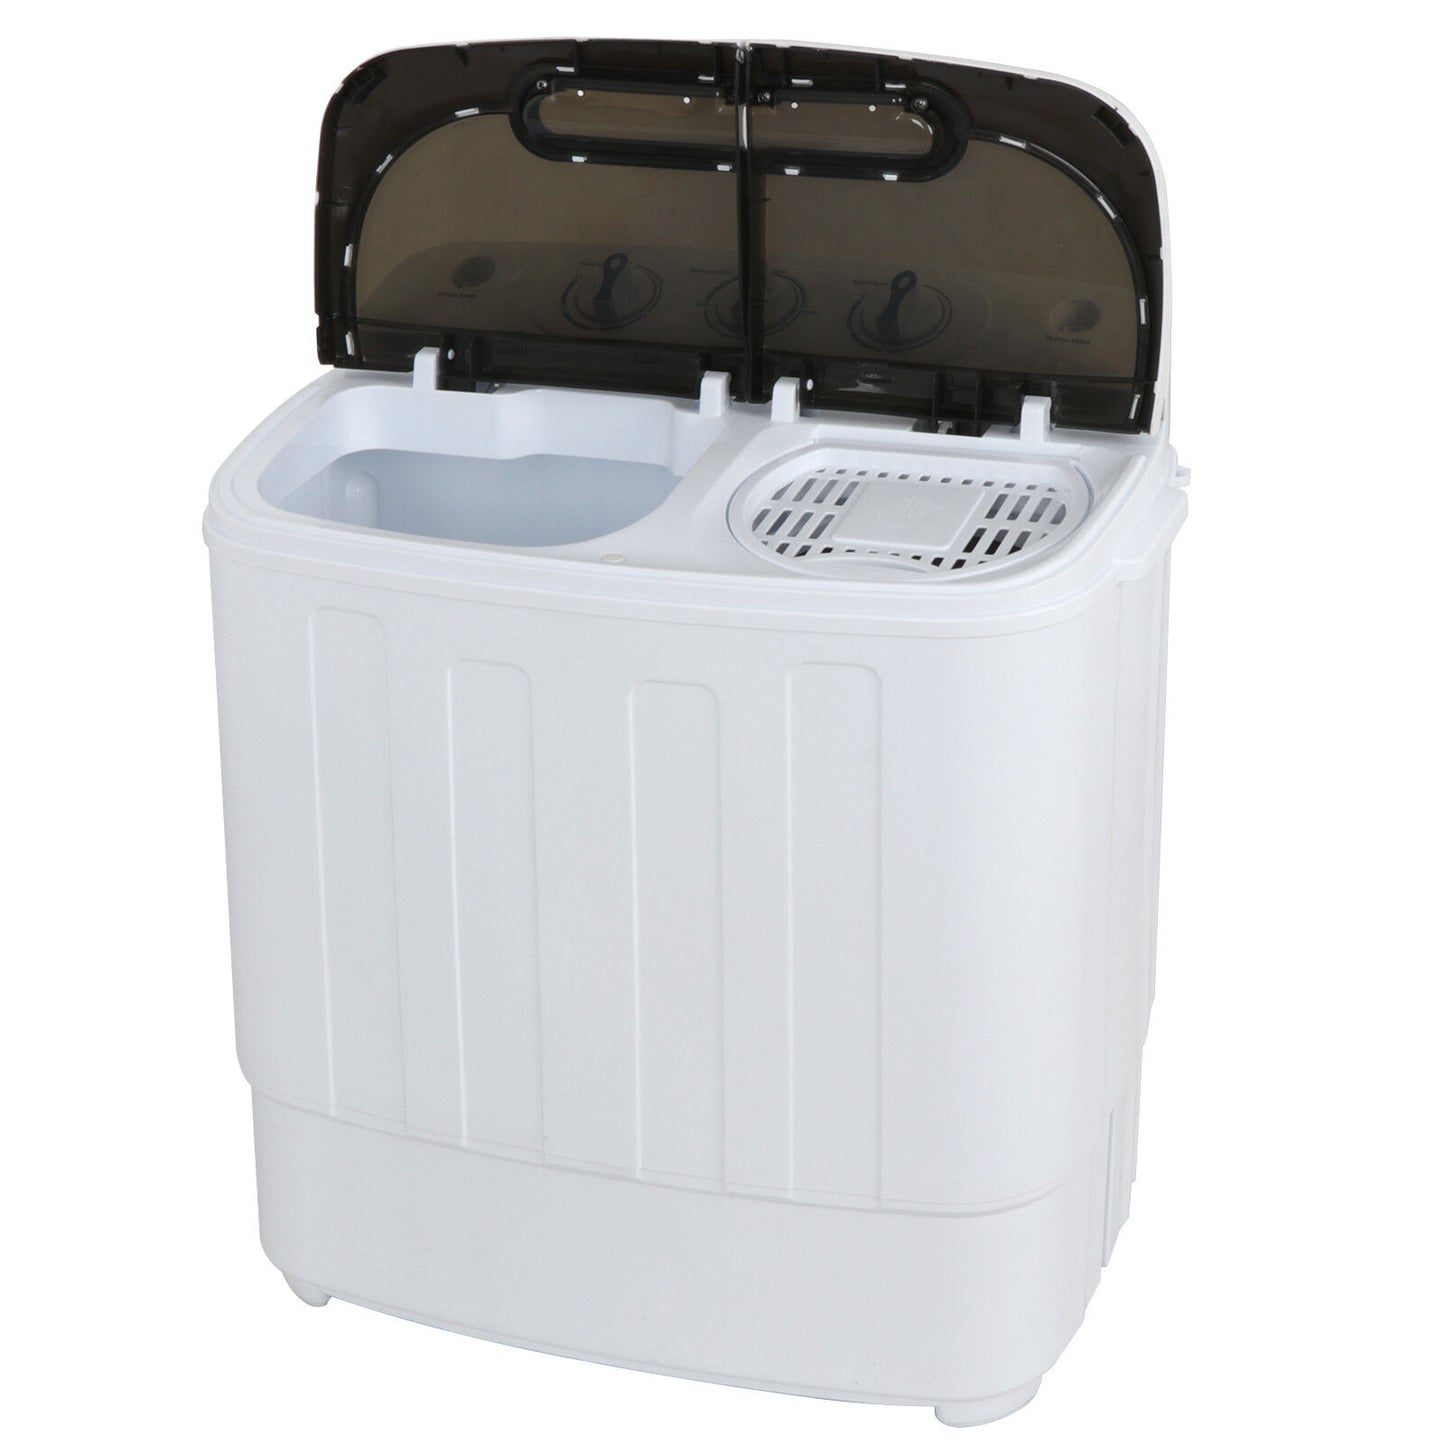 Portable Mini Wash Machine Compact Twin Tub 13lbs Top Load Washer Spin Dryer